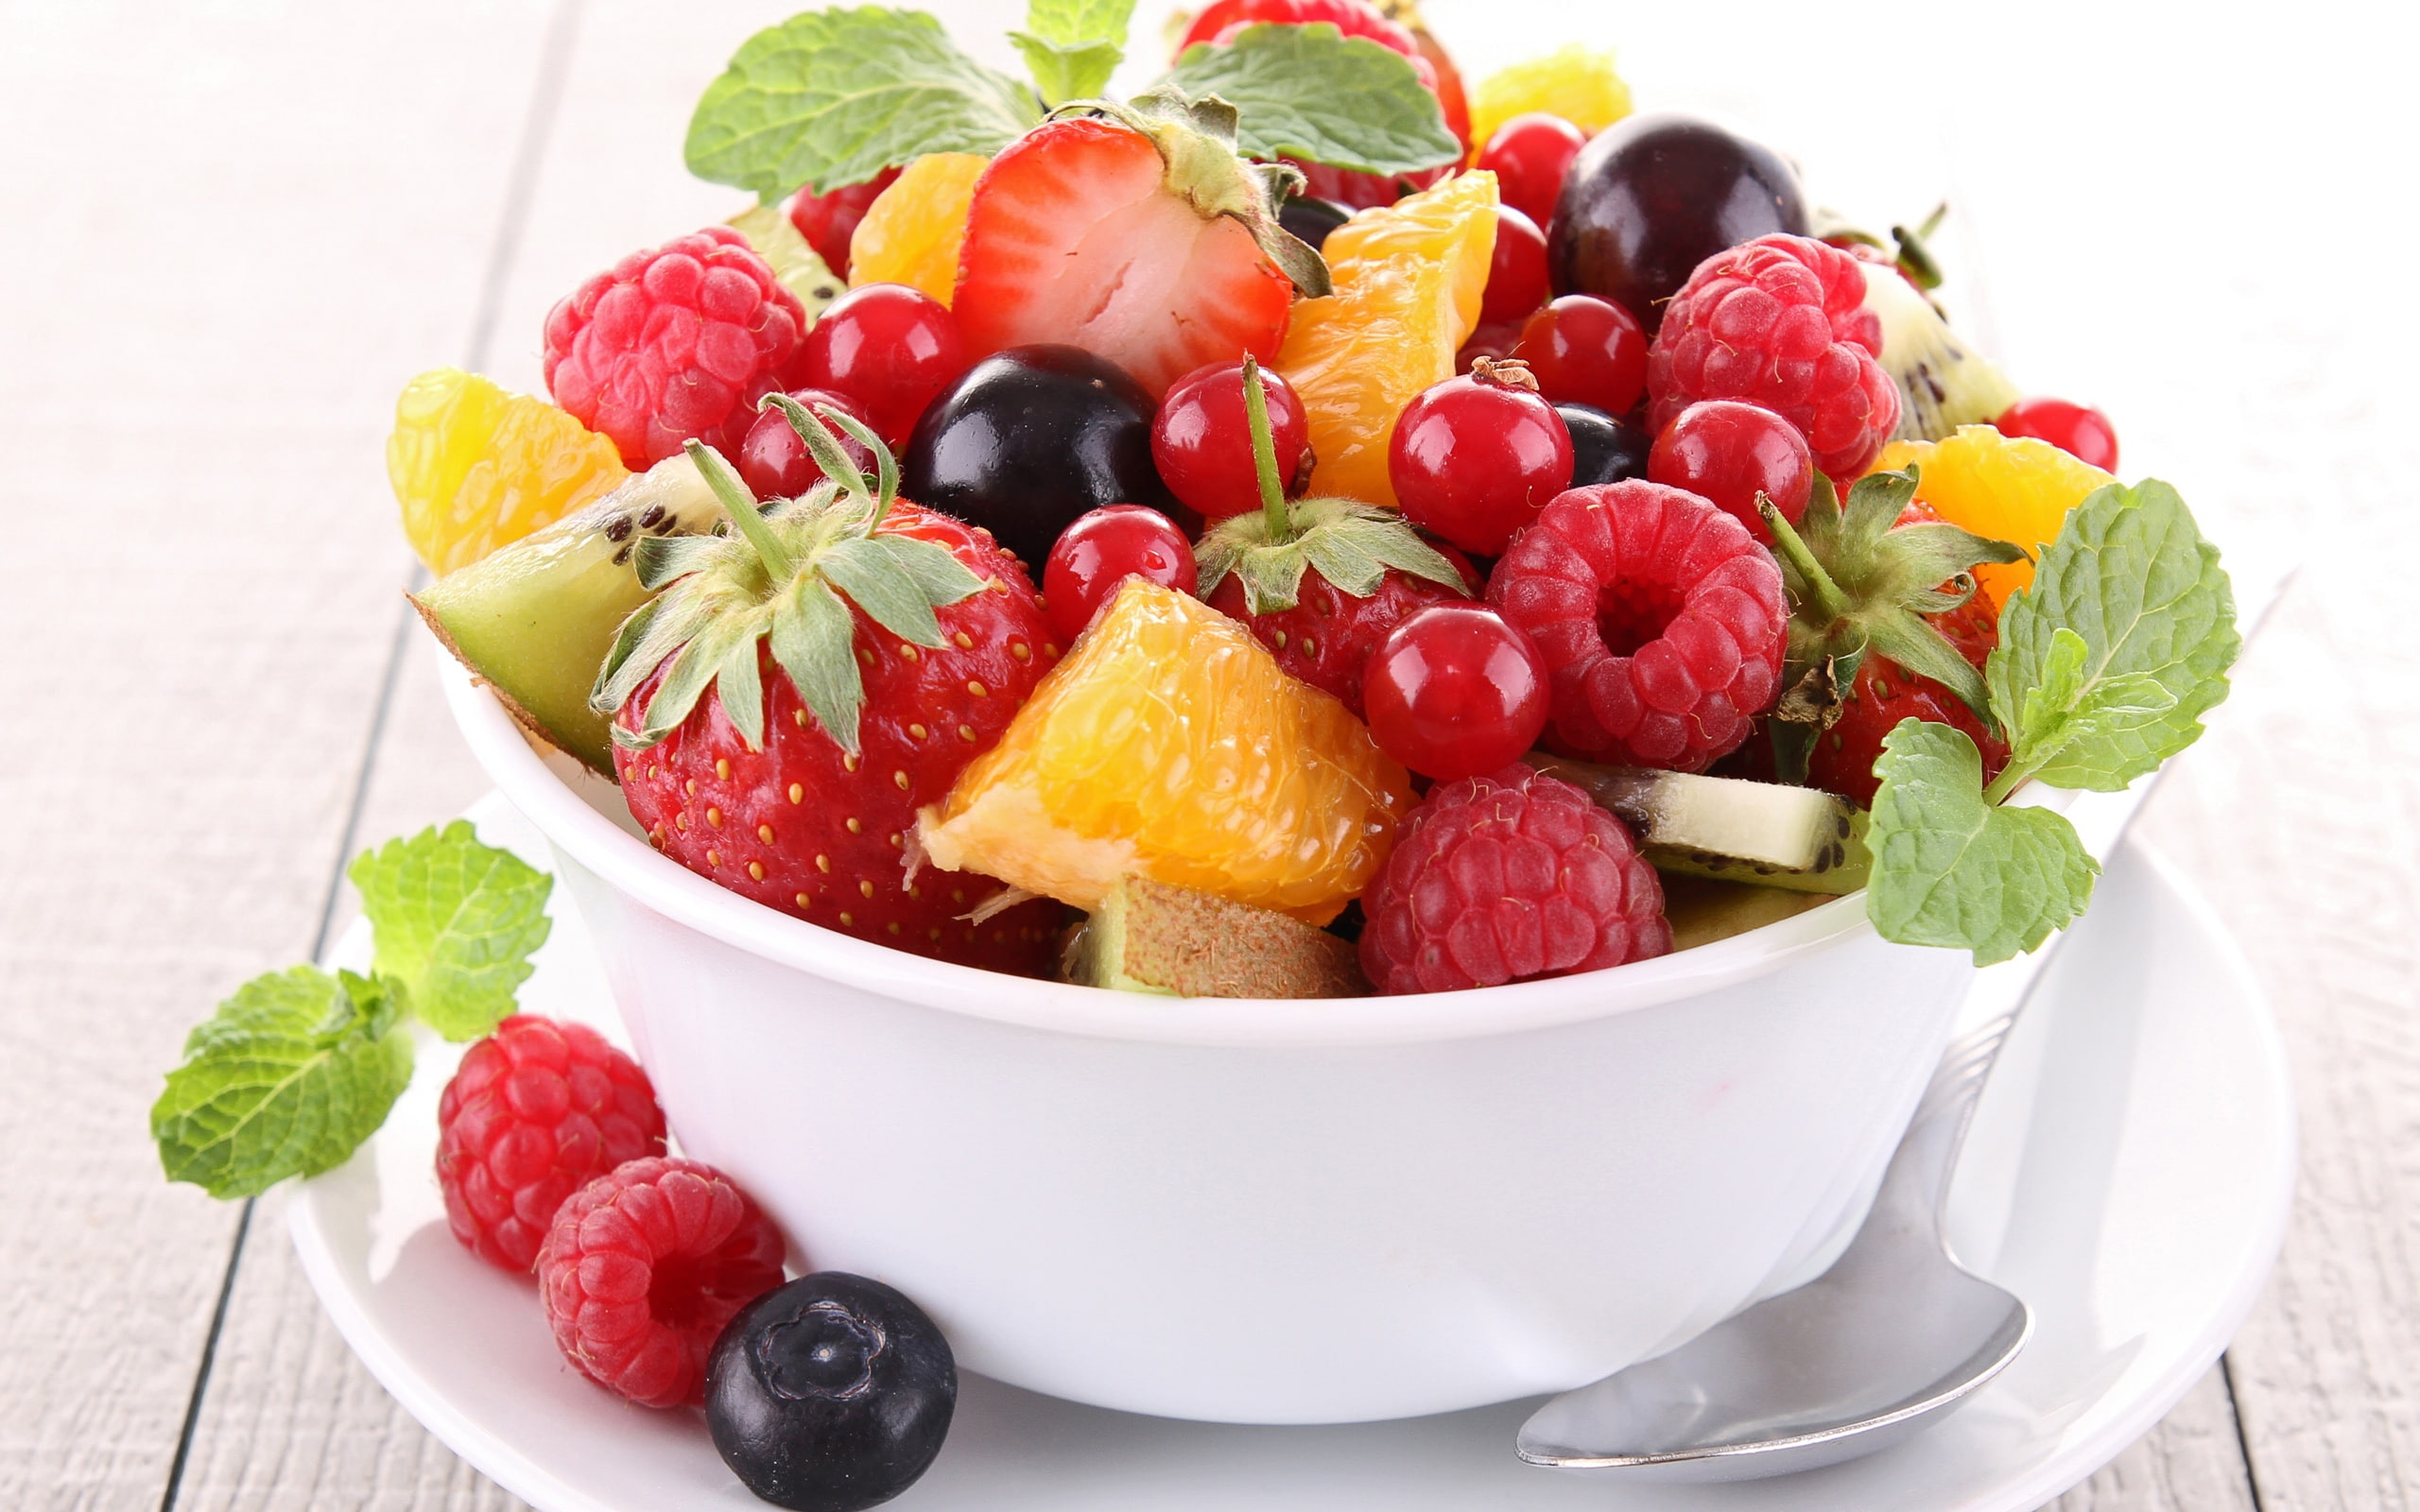 Delicious fruit salad, strawberry, raspberry, blackberry, strawberry's and berry and blue berry salad